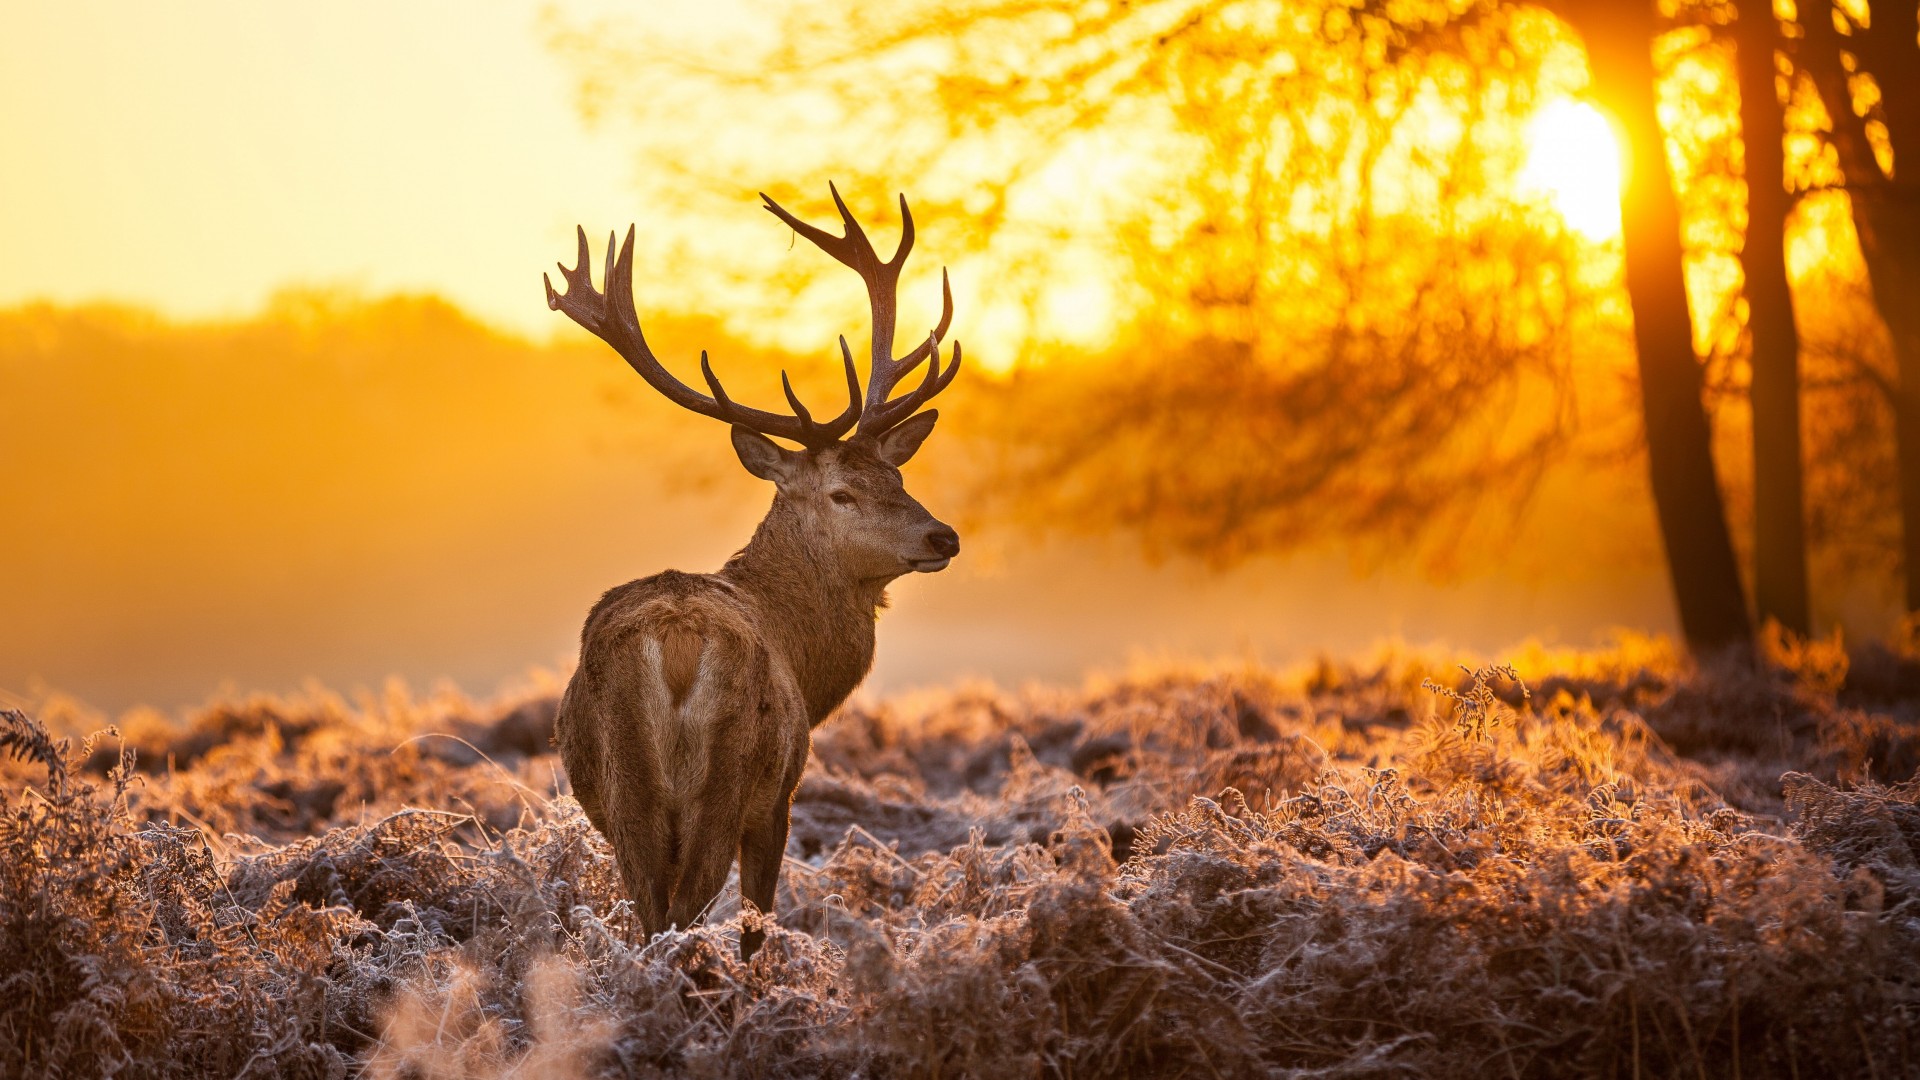 Deer, 4k, HD wallpaper, wild, sun, yellow, nature, winter (horizontal)